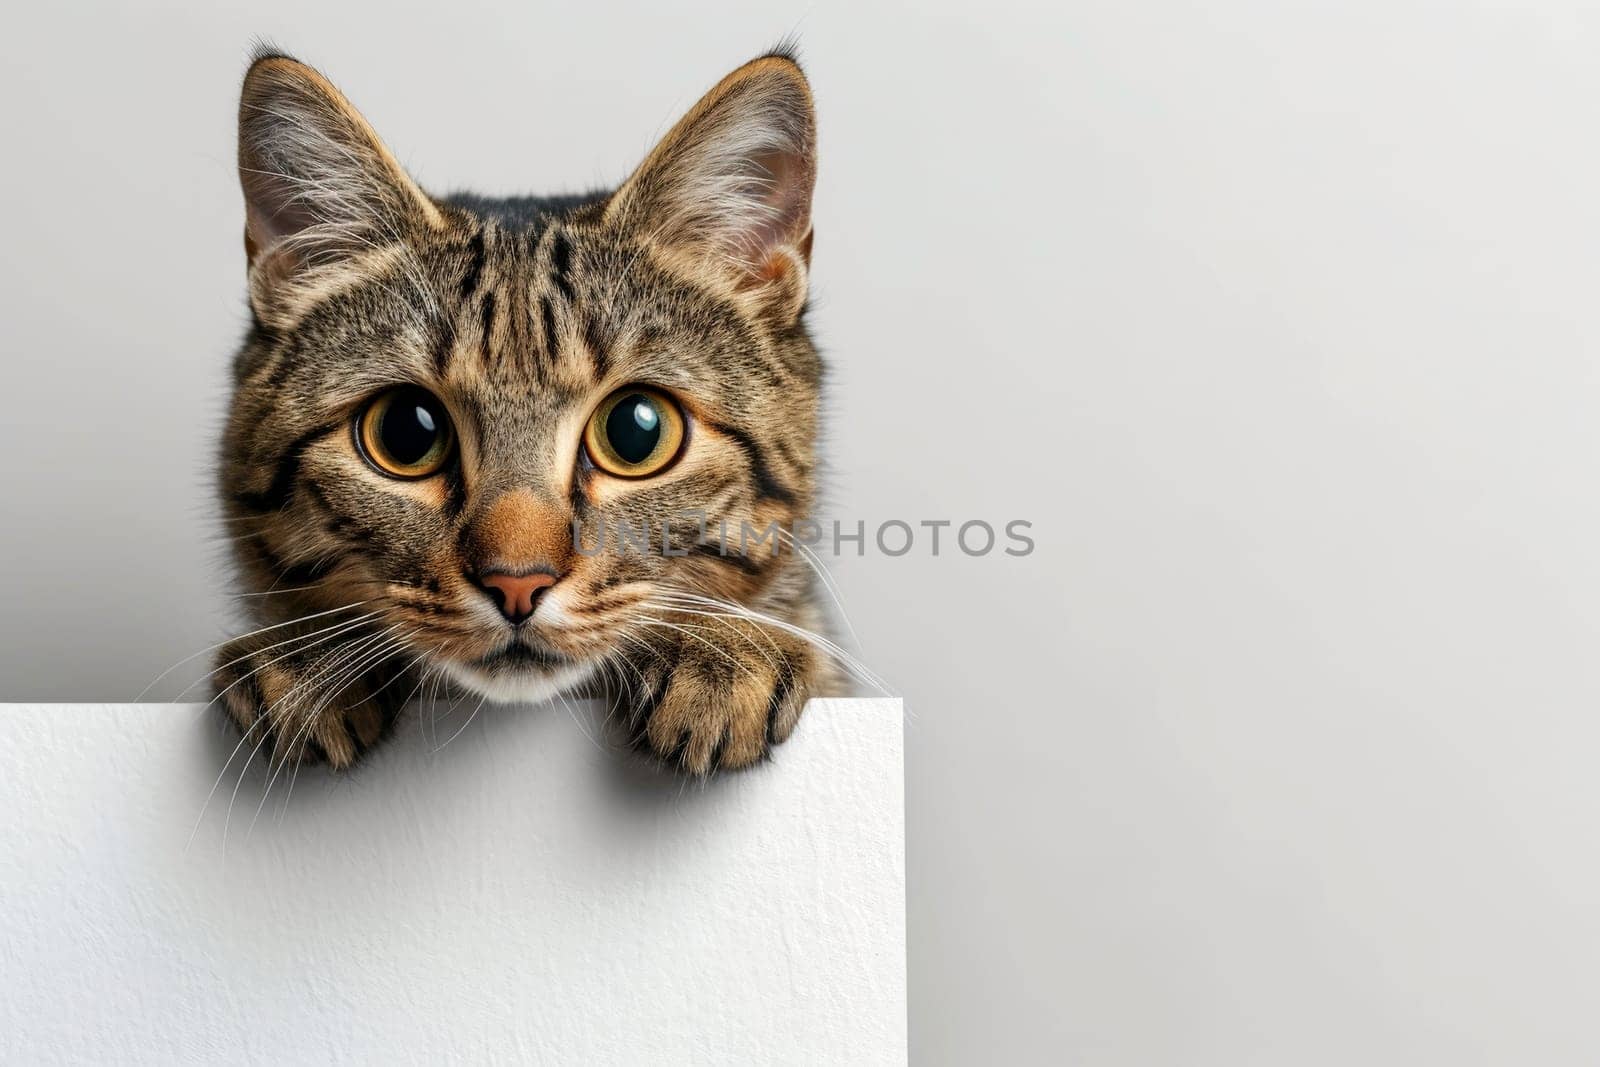 The kitten cat peeks out the door. AI generative..